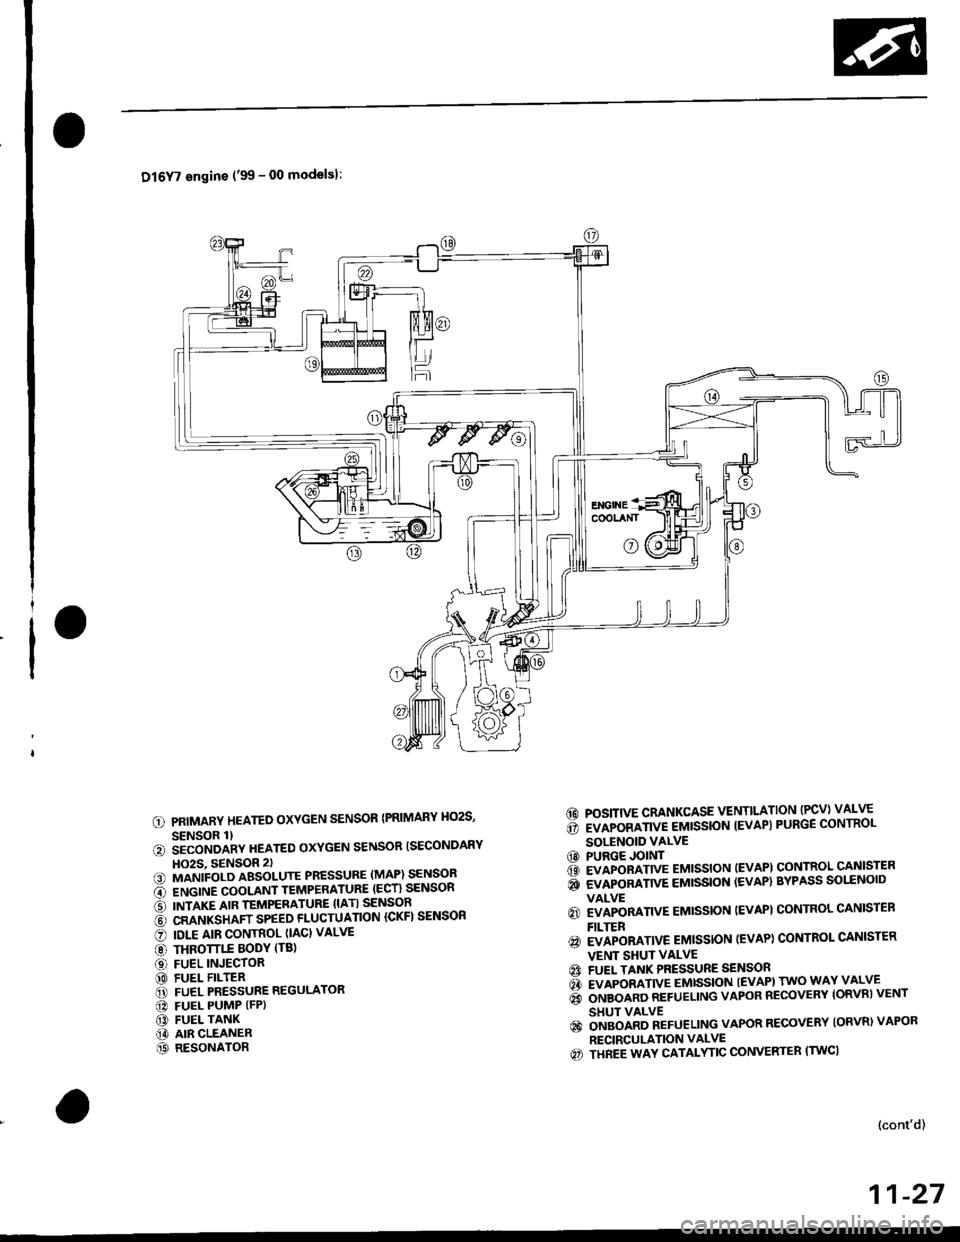 HONDA CIVIC 1999 6.G Repair Manual Dl6Y7 engins (99 - 00 modelsl:
PRIMARY HEATED OXYGEN SENSOR {PRIMARY HO2S,
SENSOR 1)iiconoanv neareo oxYGEN sENsoR ISECoNDARY
HO2S, 9ENSOR 2)MANIFOLD ABSOLUTE PRESSURE (MAP) SENSOR
ENGINE COOLANT TEM